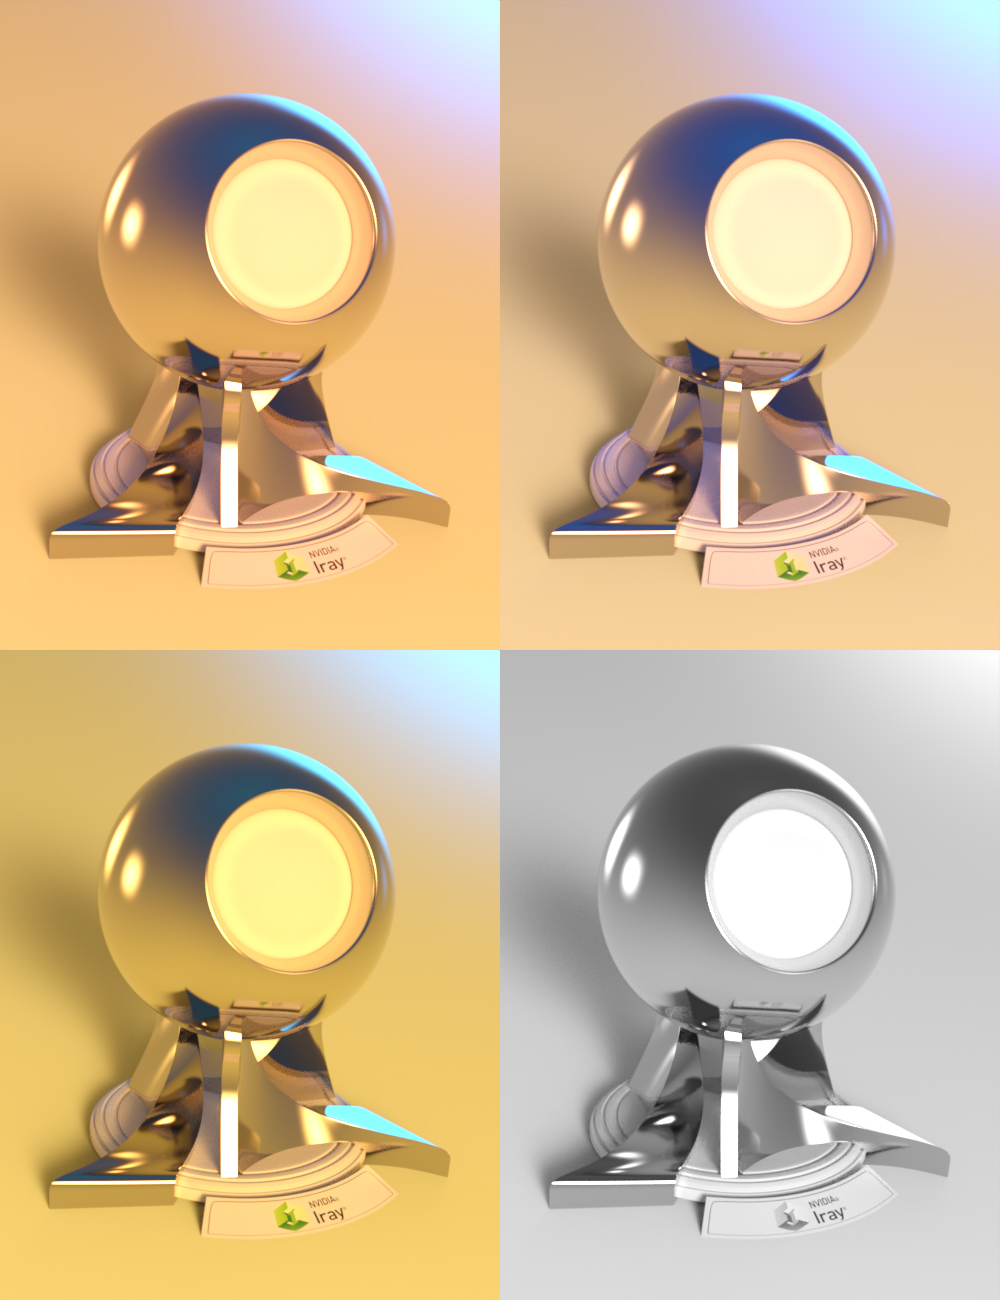 Golden Glow Light Set by: Quixotry, 3D Models by Daz 3D